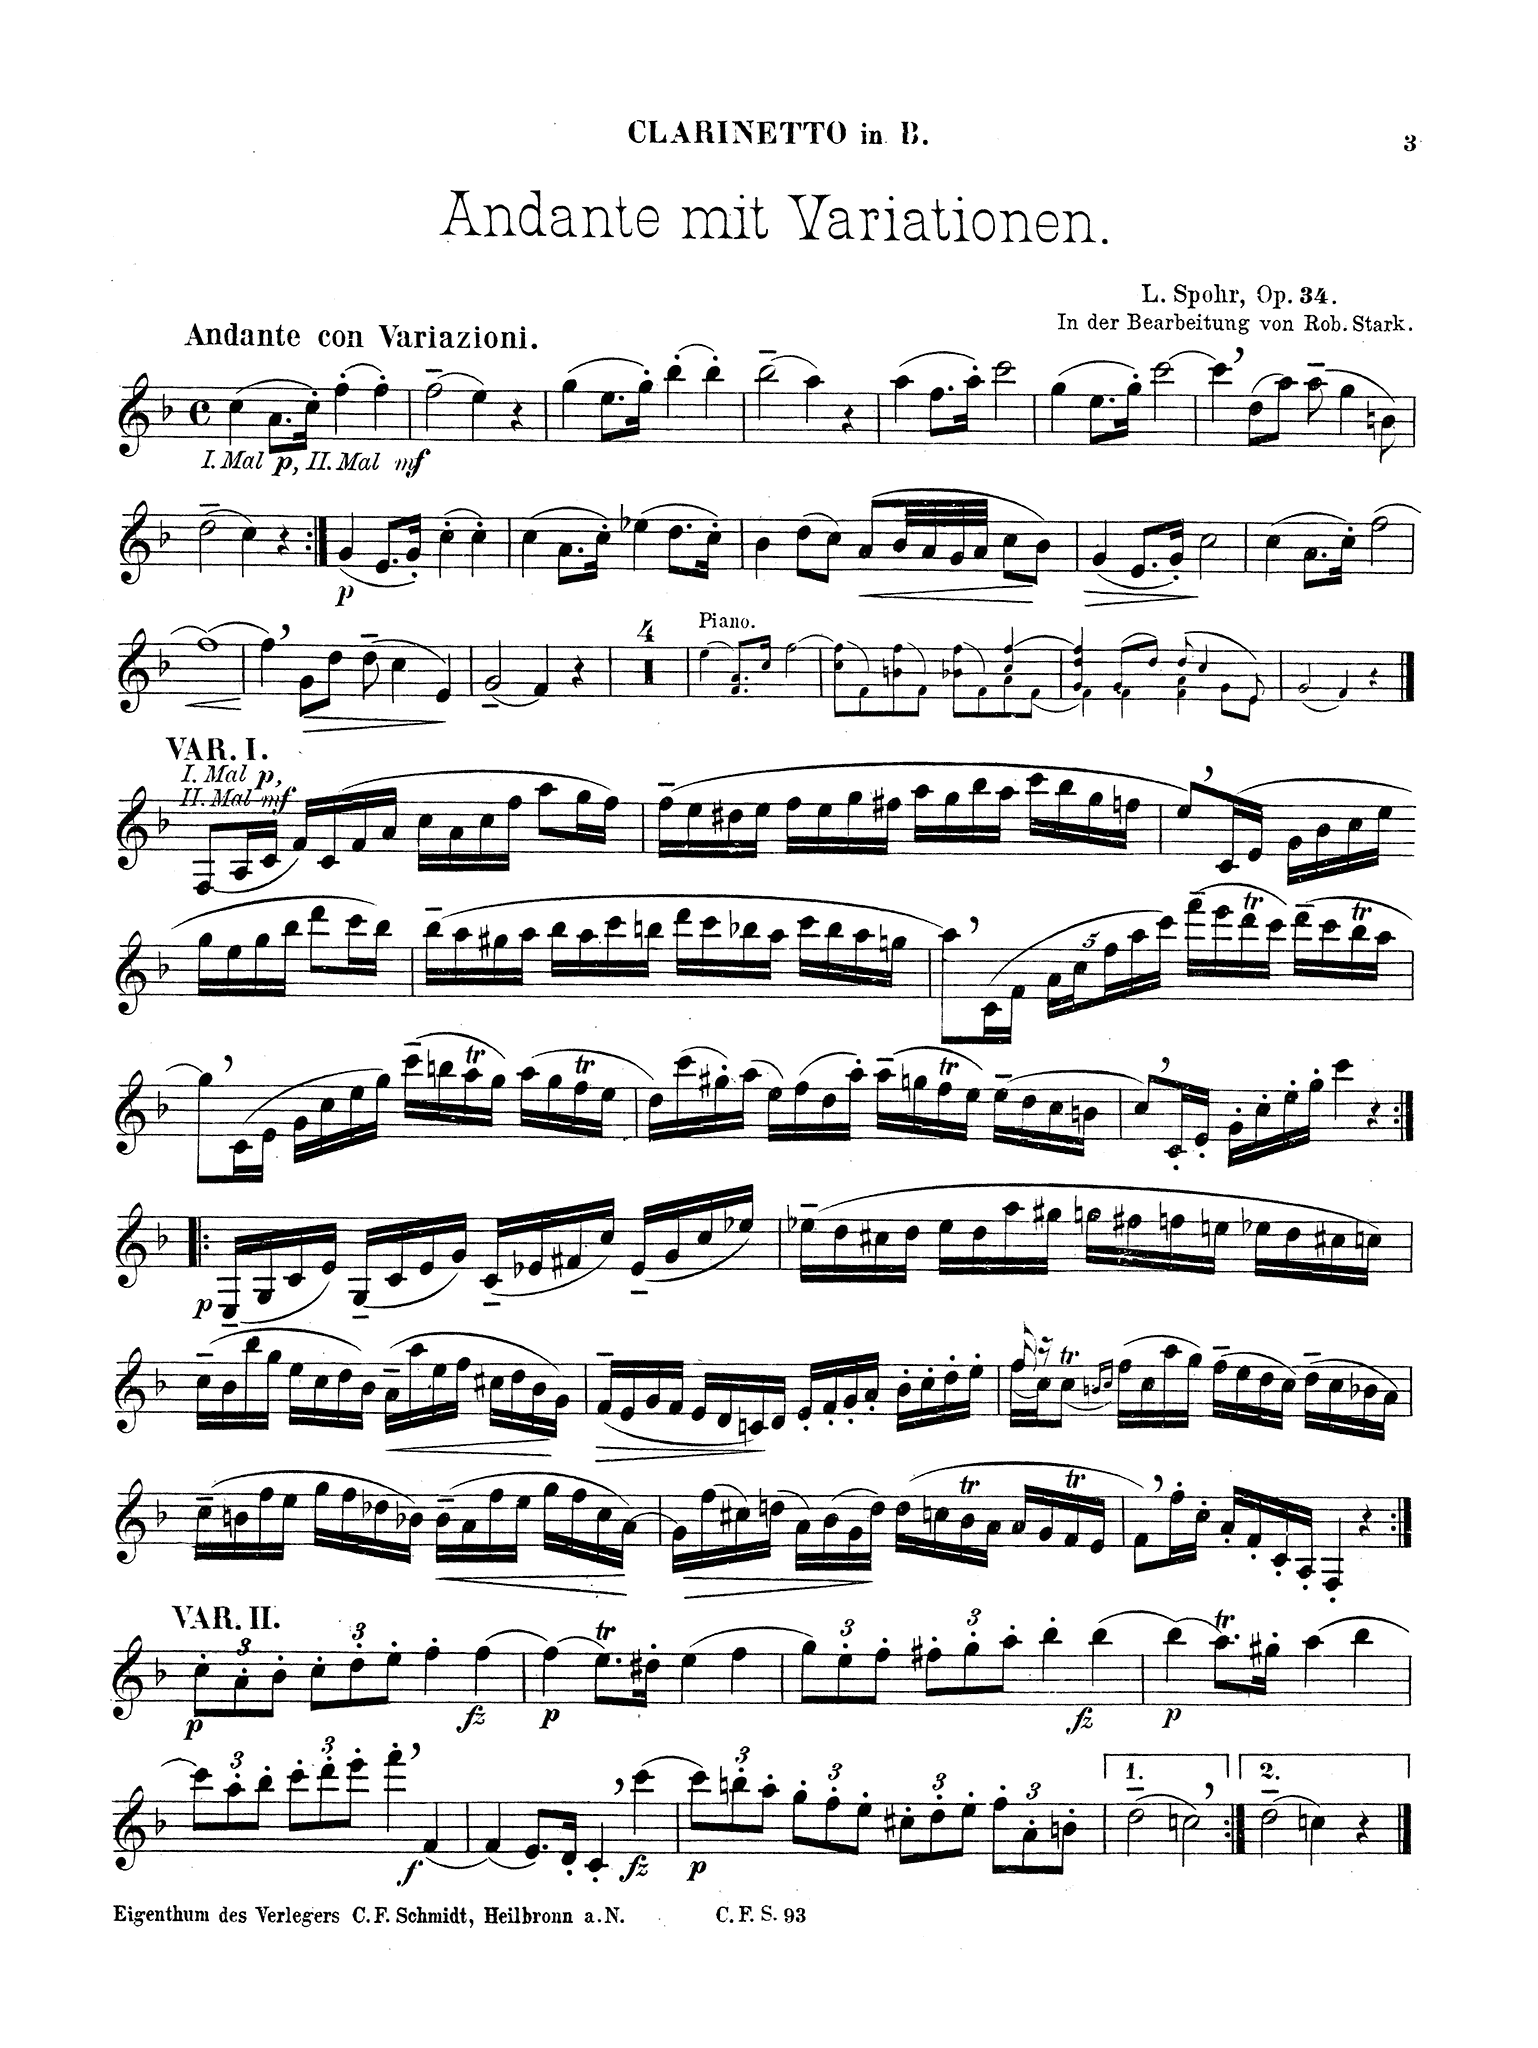 Spohr Andante & Variations (Nocturne), Op. 34 clarinet and string quartet solo part